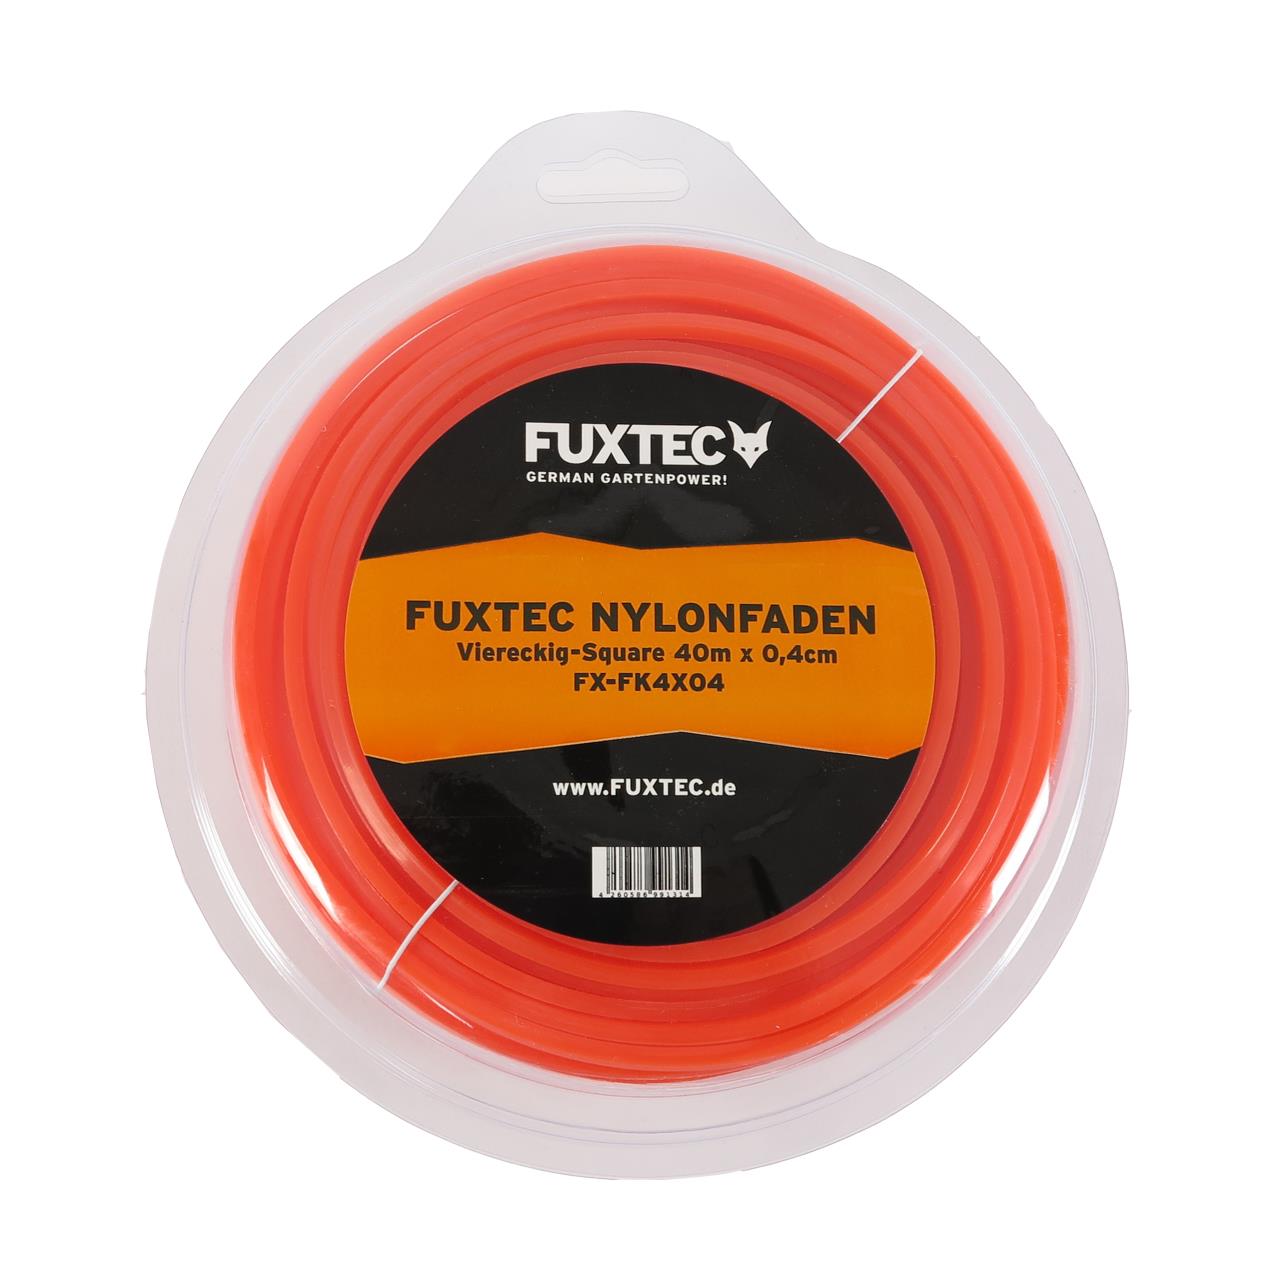 FUXTEC Nylonfaden Viereckig-Square 40m x 0,4 cm